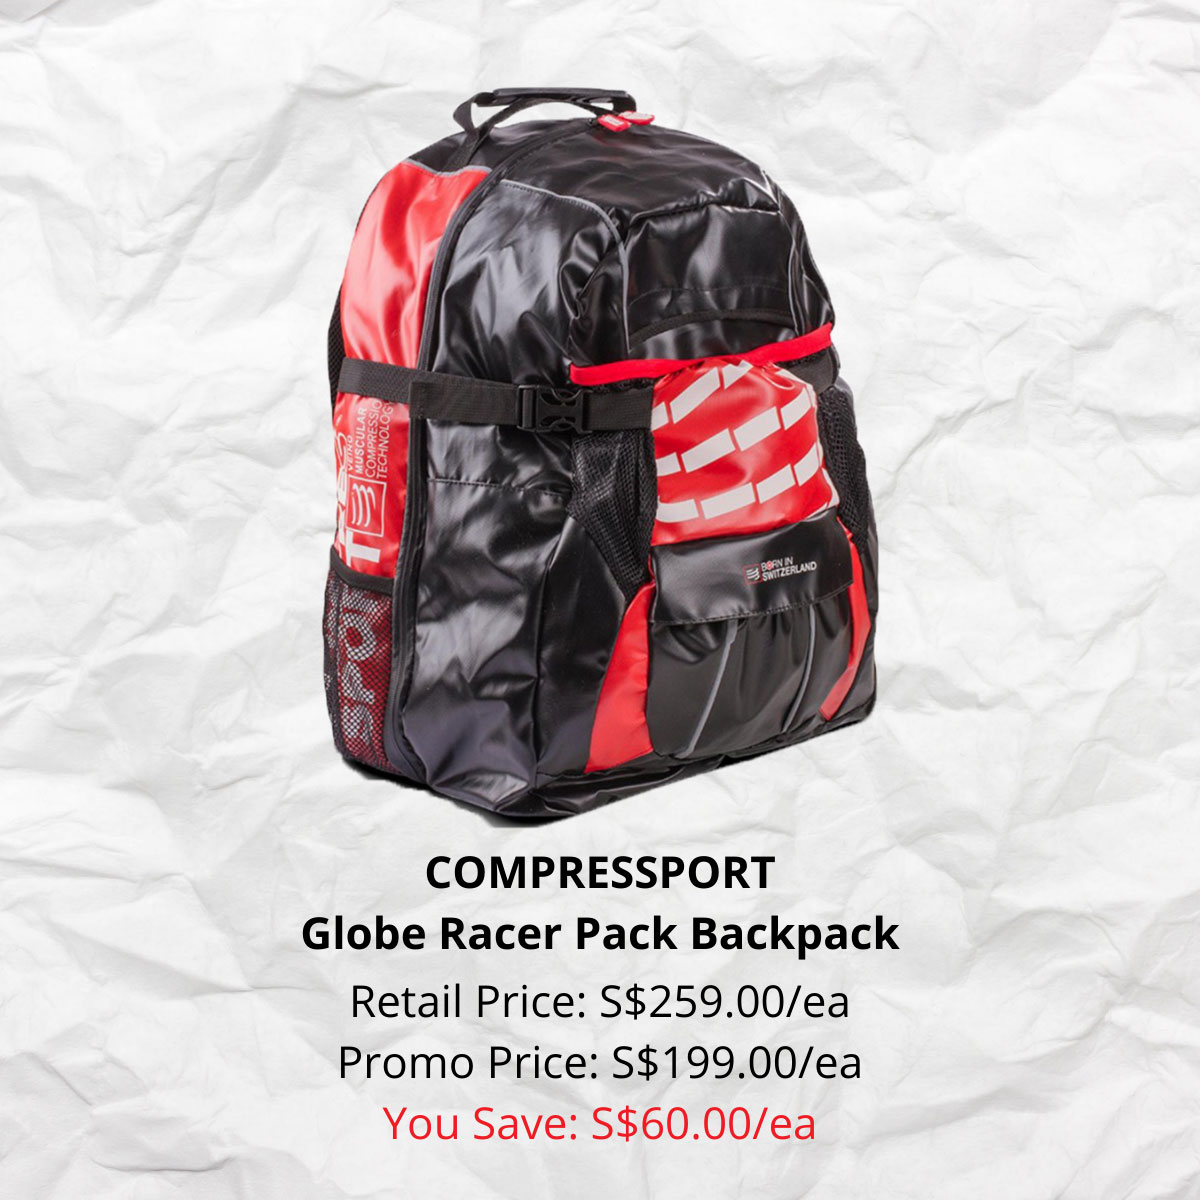 COMPRESSPORT Globe Racer Pack Backpack